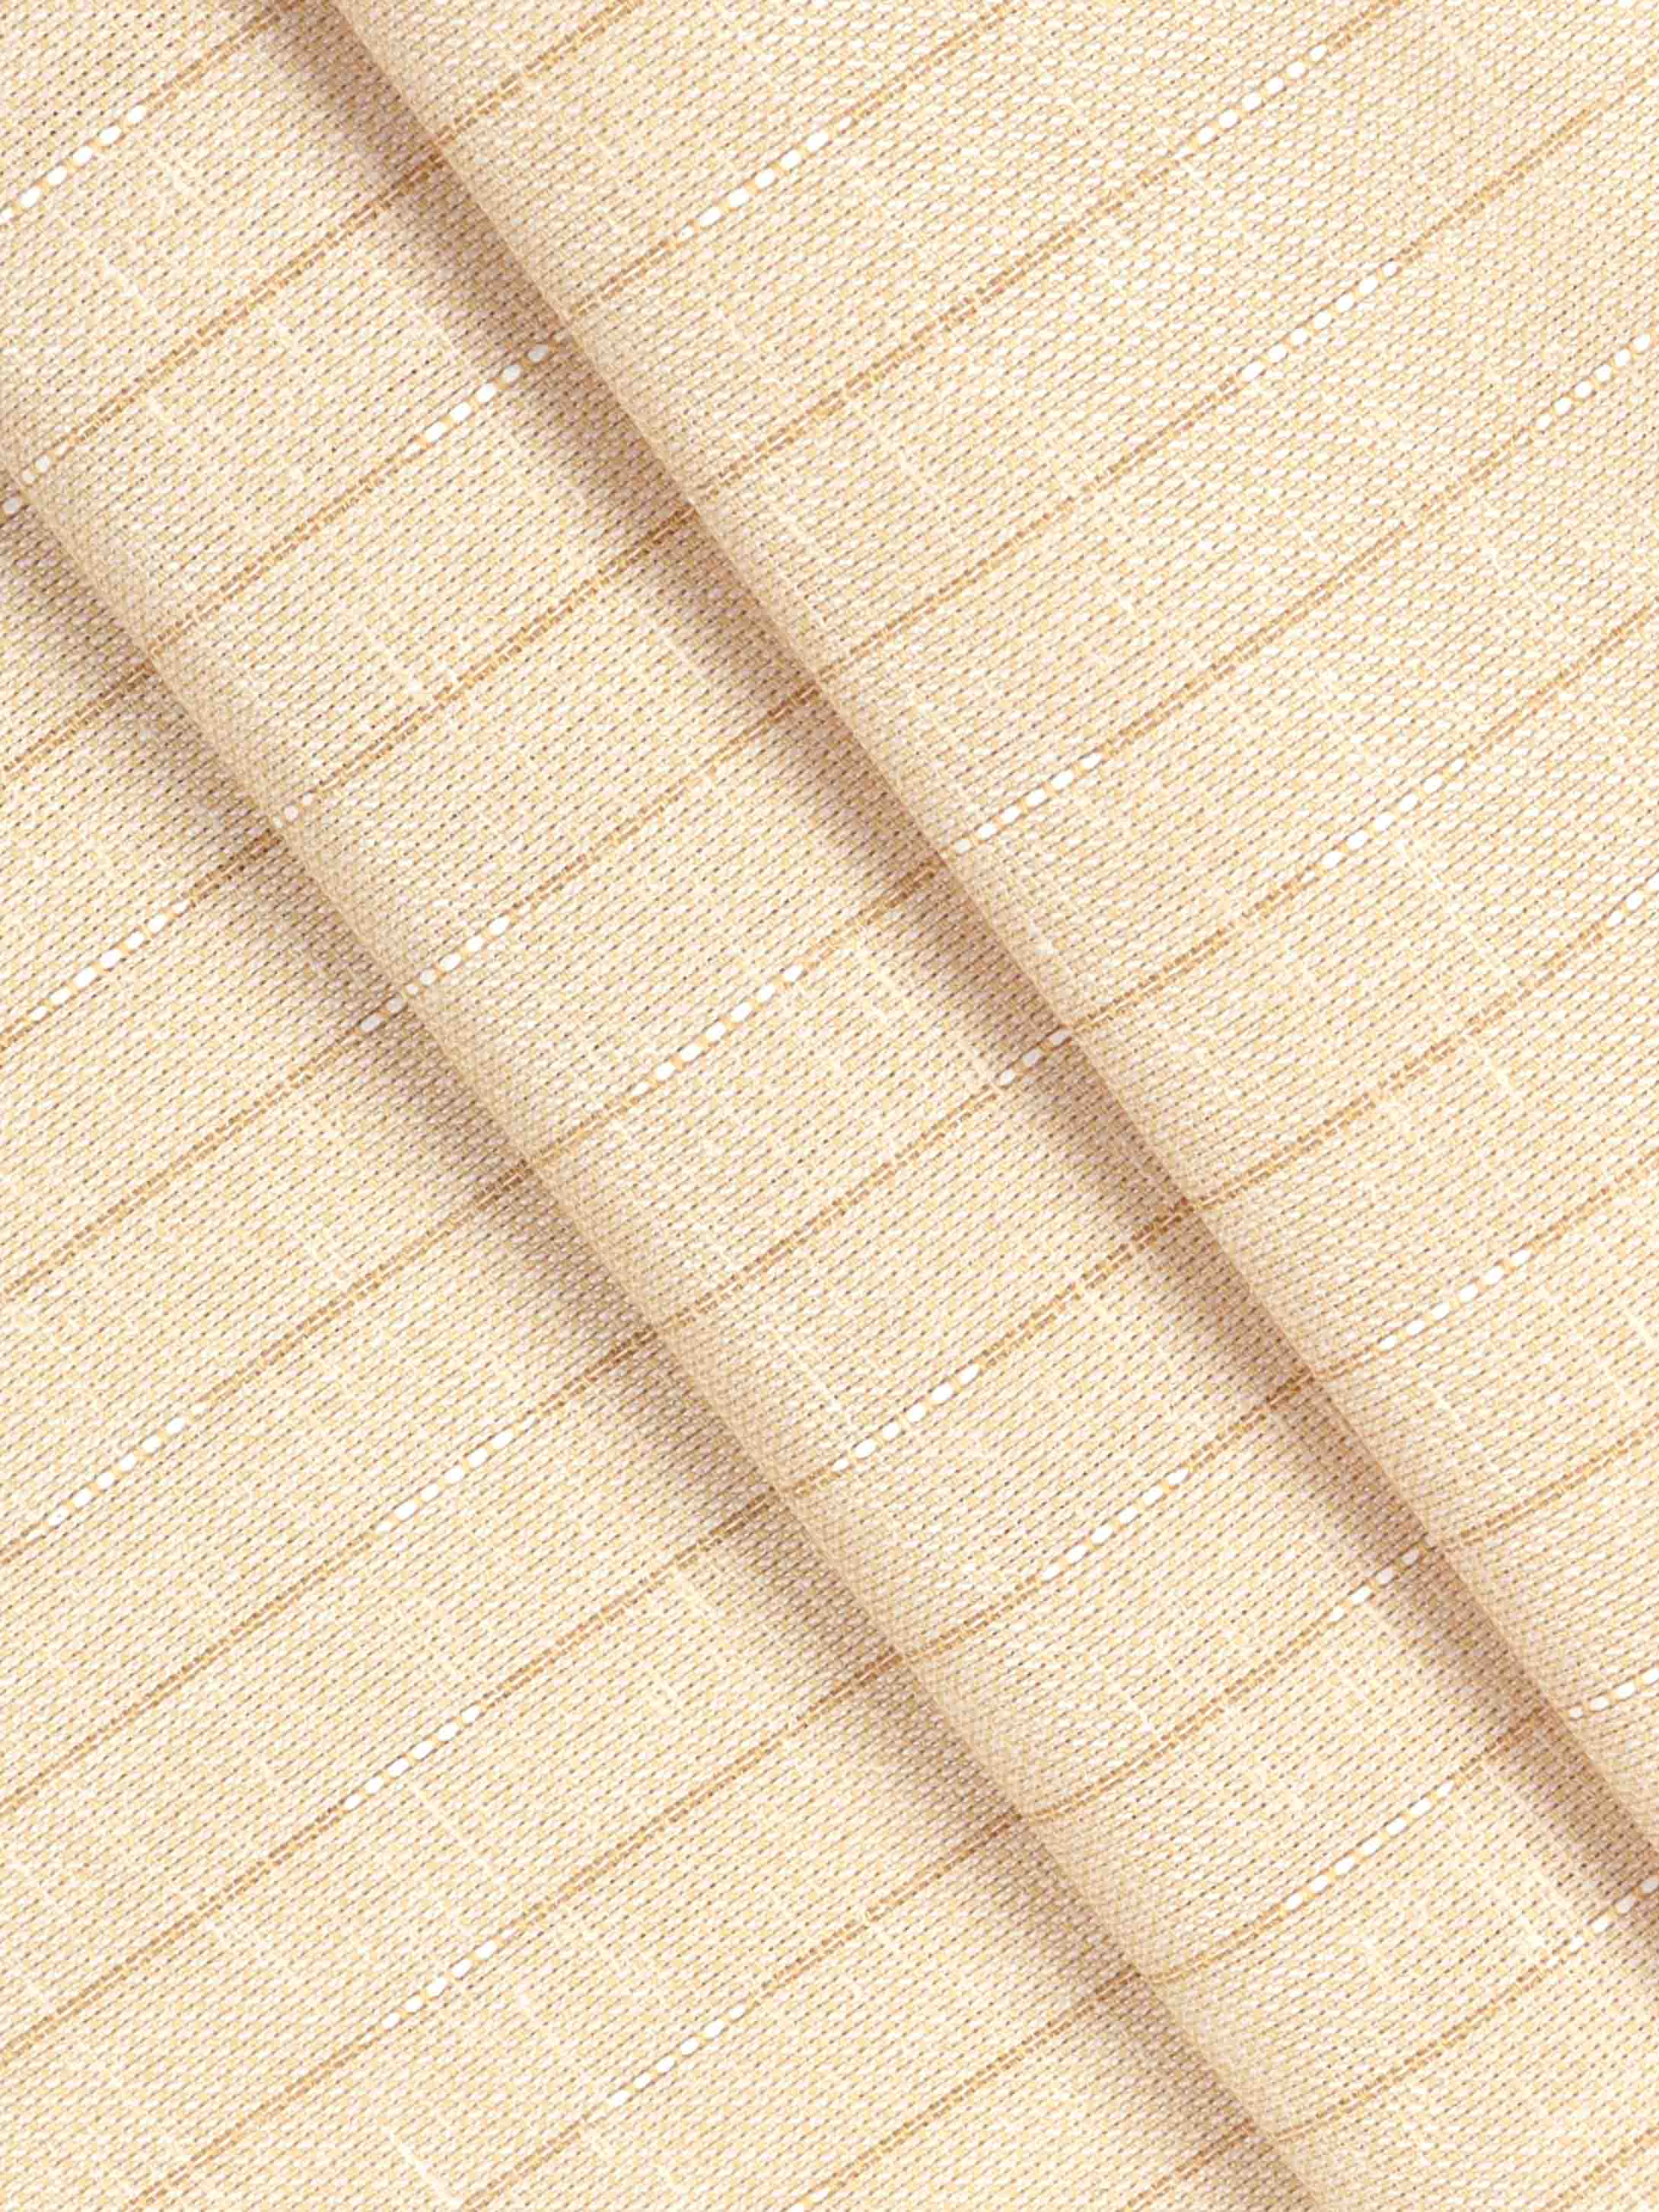 Cotton Colour Sandal Striped Shirt Fabric High Style-Pattern view